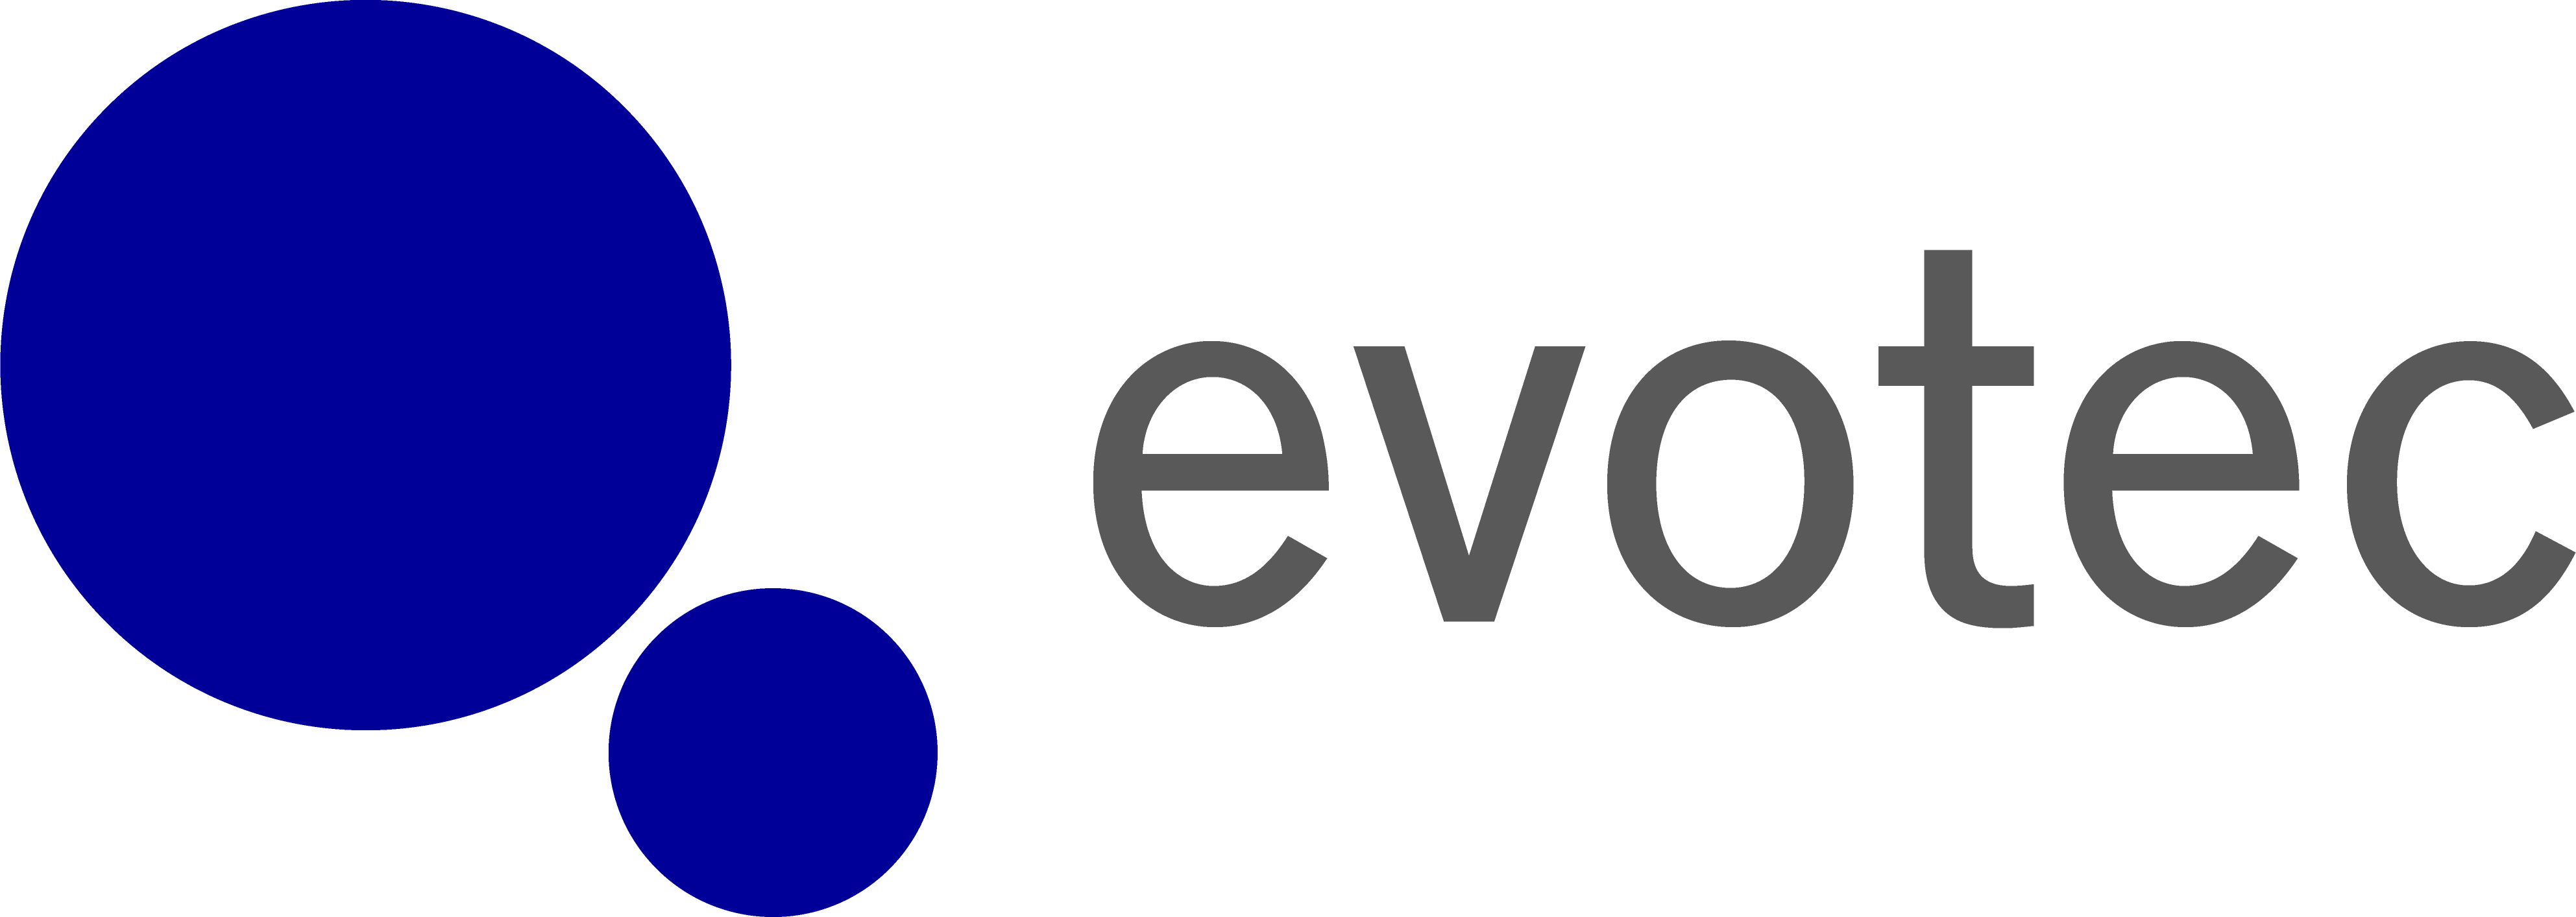 evotoc Logo 